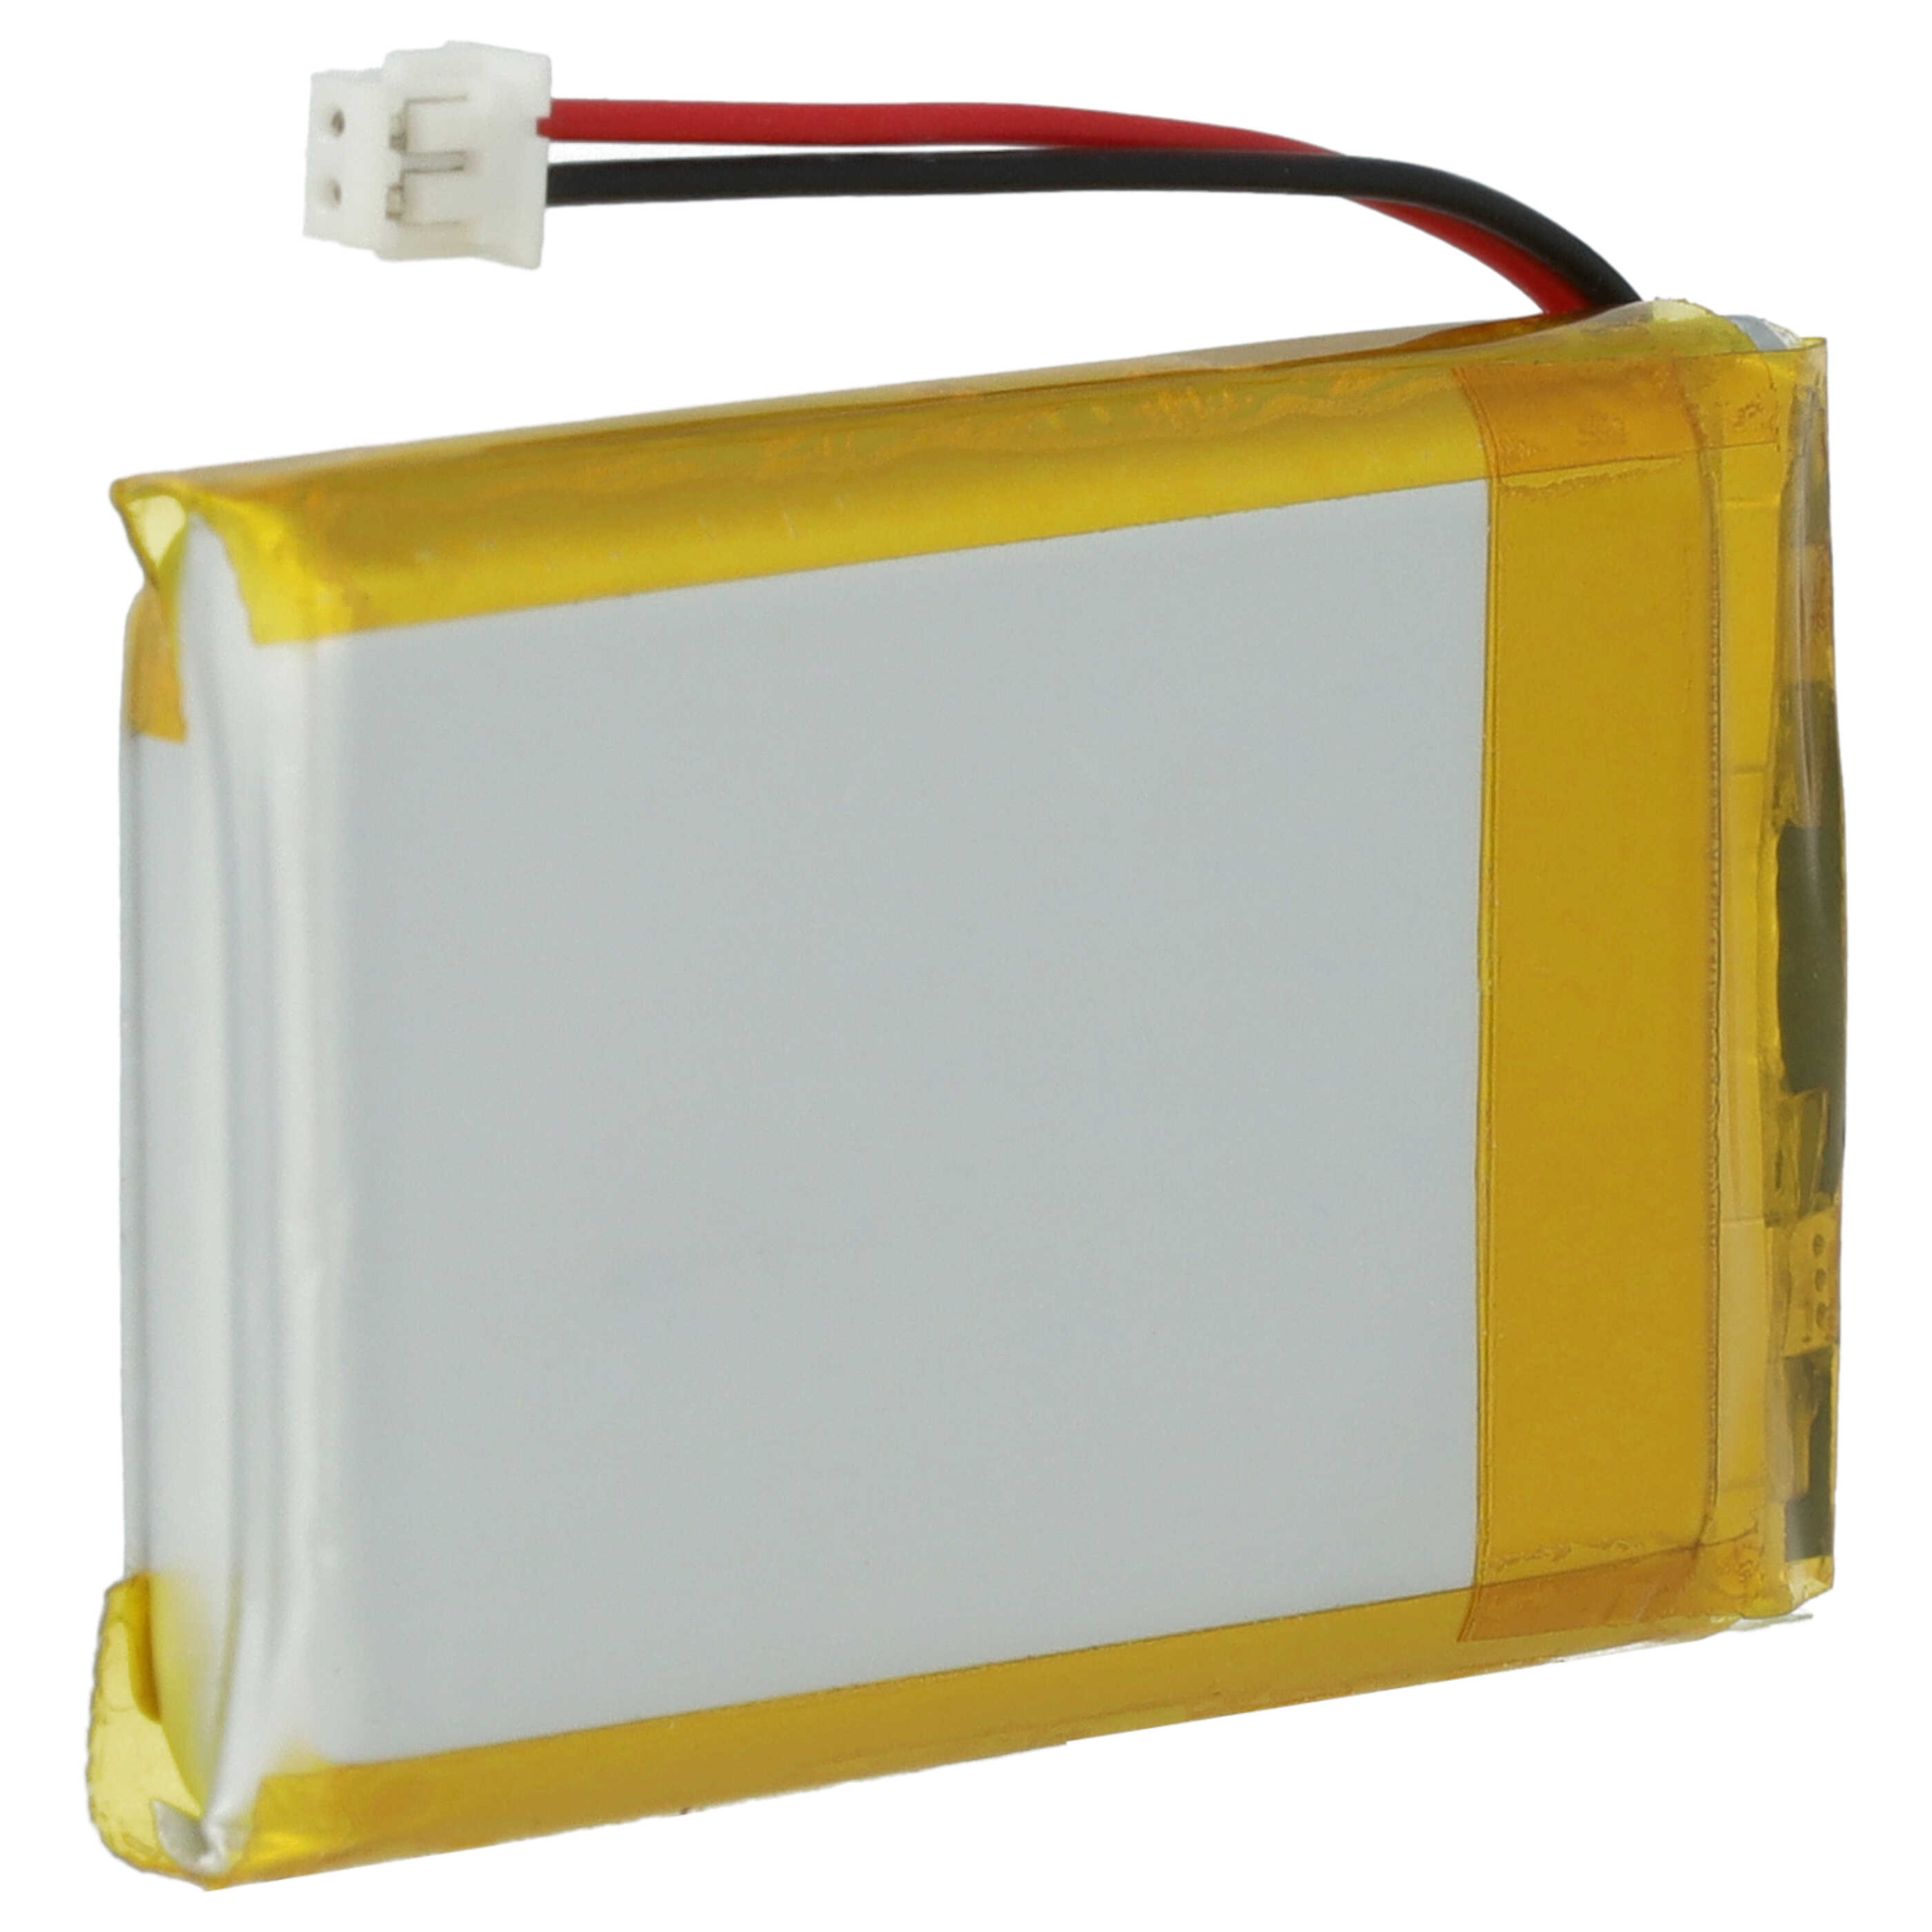 Akumulator do niani elektronicznej zamiennik Babymoov 1ICP6/30/48 - 900 mAh 3,7 V LiPo